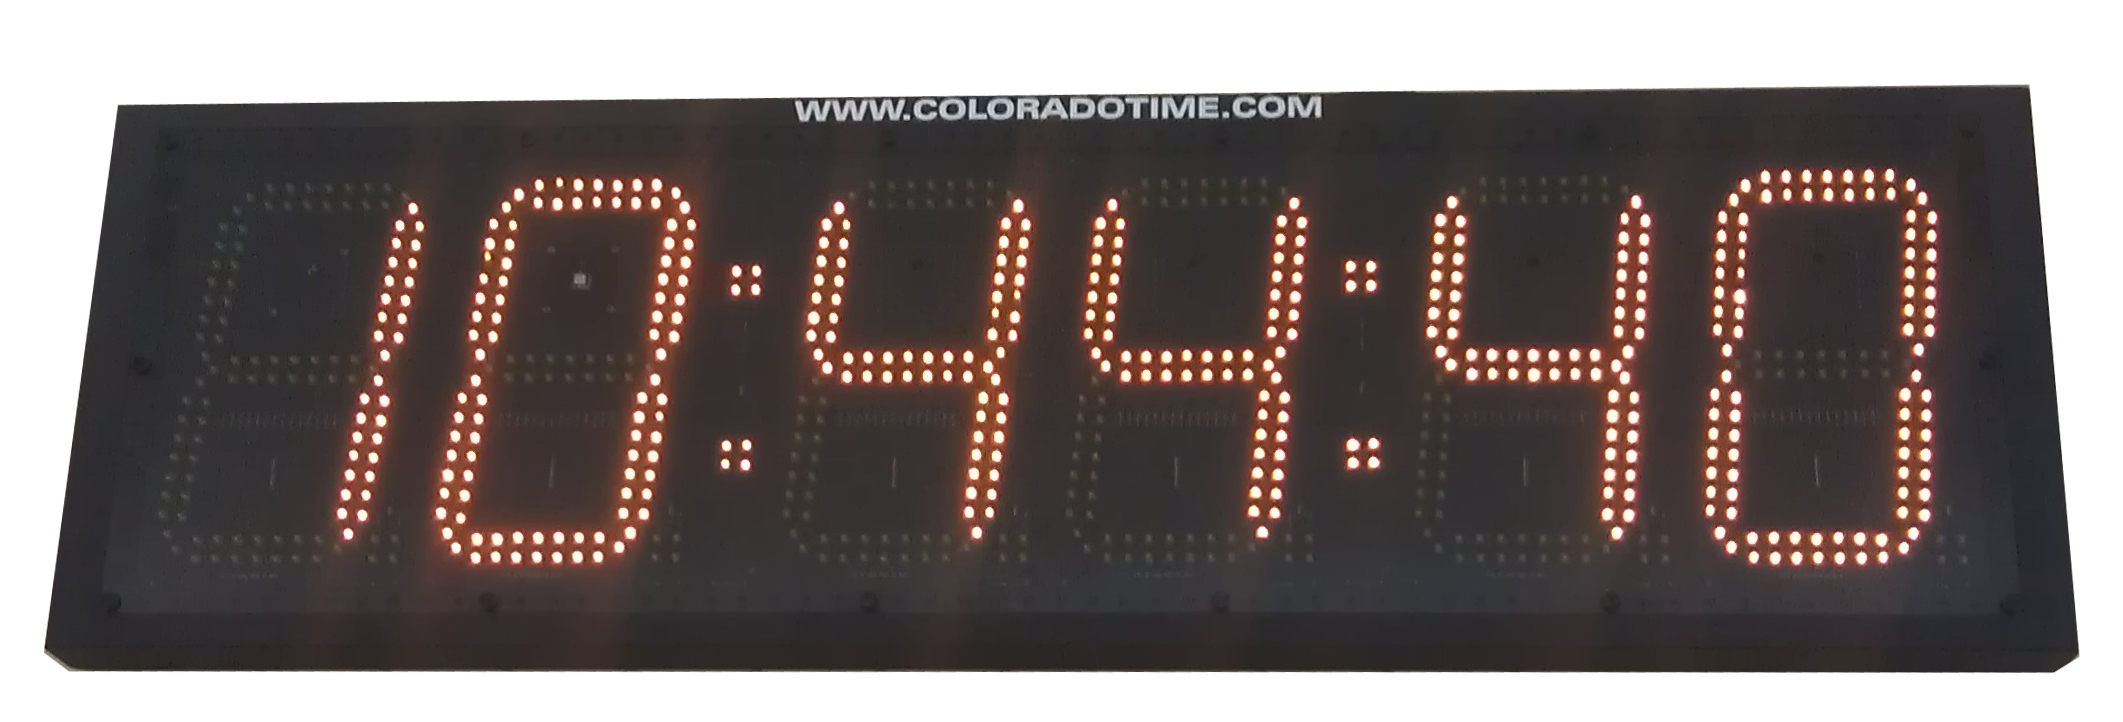 slim 6-digit wall mounted pace clock